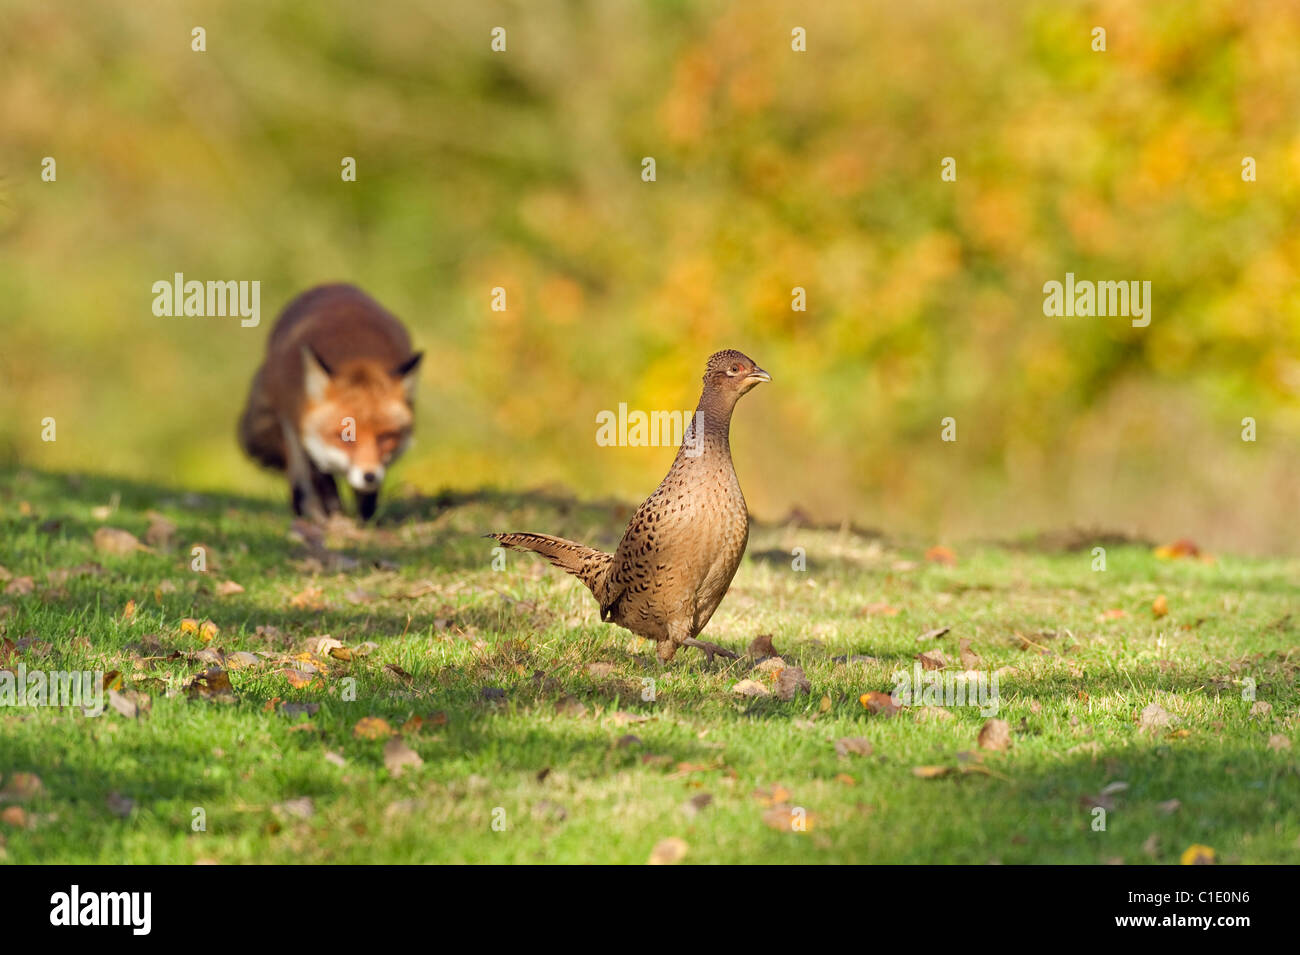 Le renard roux (Vulpes vulpes), de North Downs, Kent, UK. Traquer quelqu'un faisan Banque D'Images